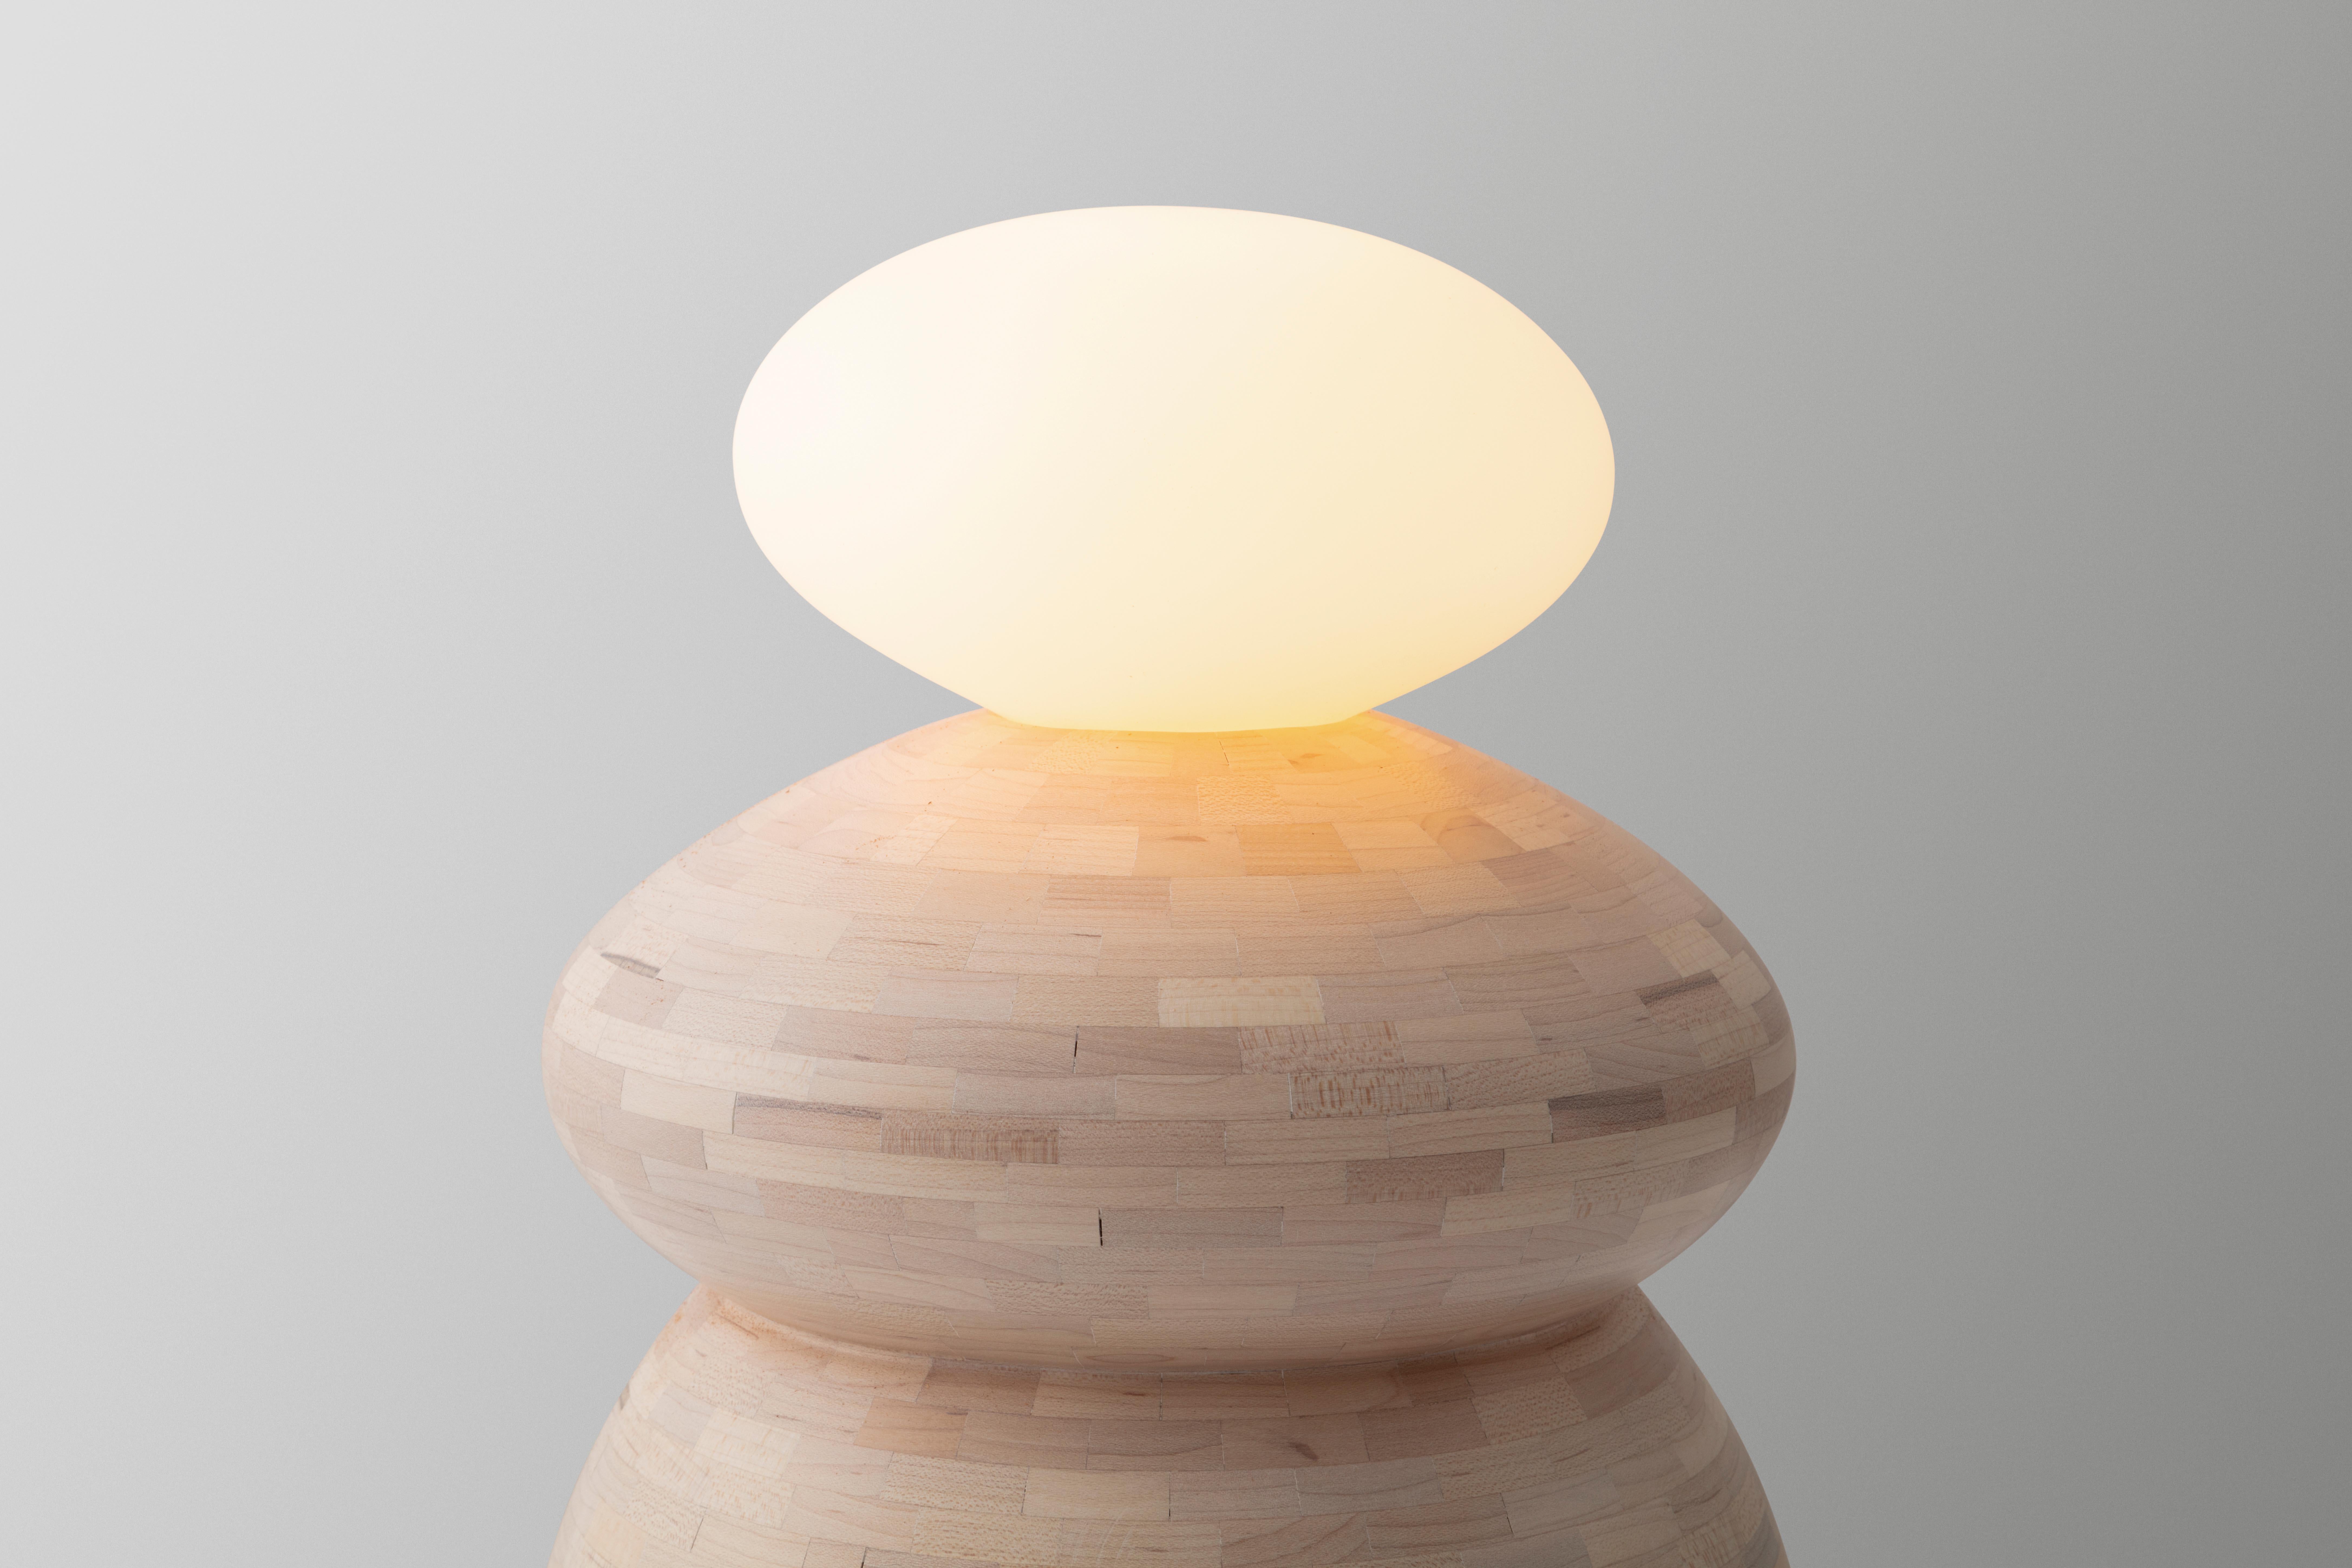 Moderne STOCKED Cairn Light n°1, finition blanc os, disponible maintenant en vente